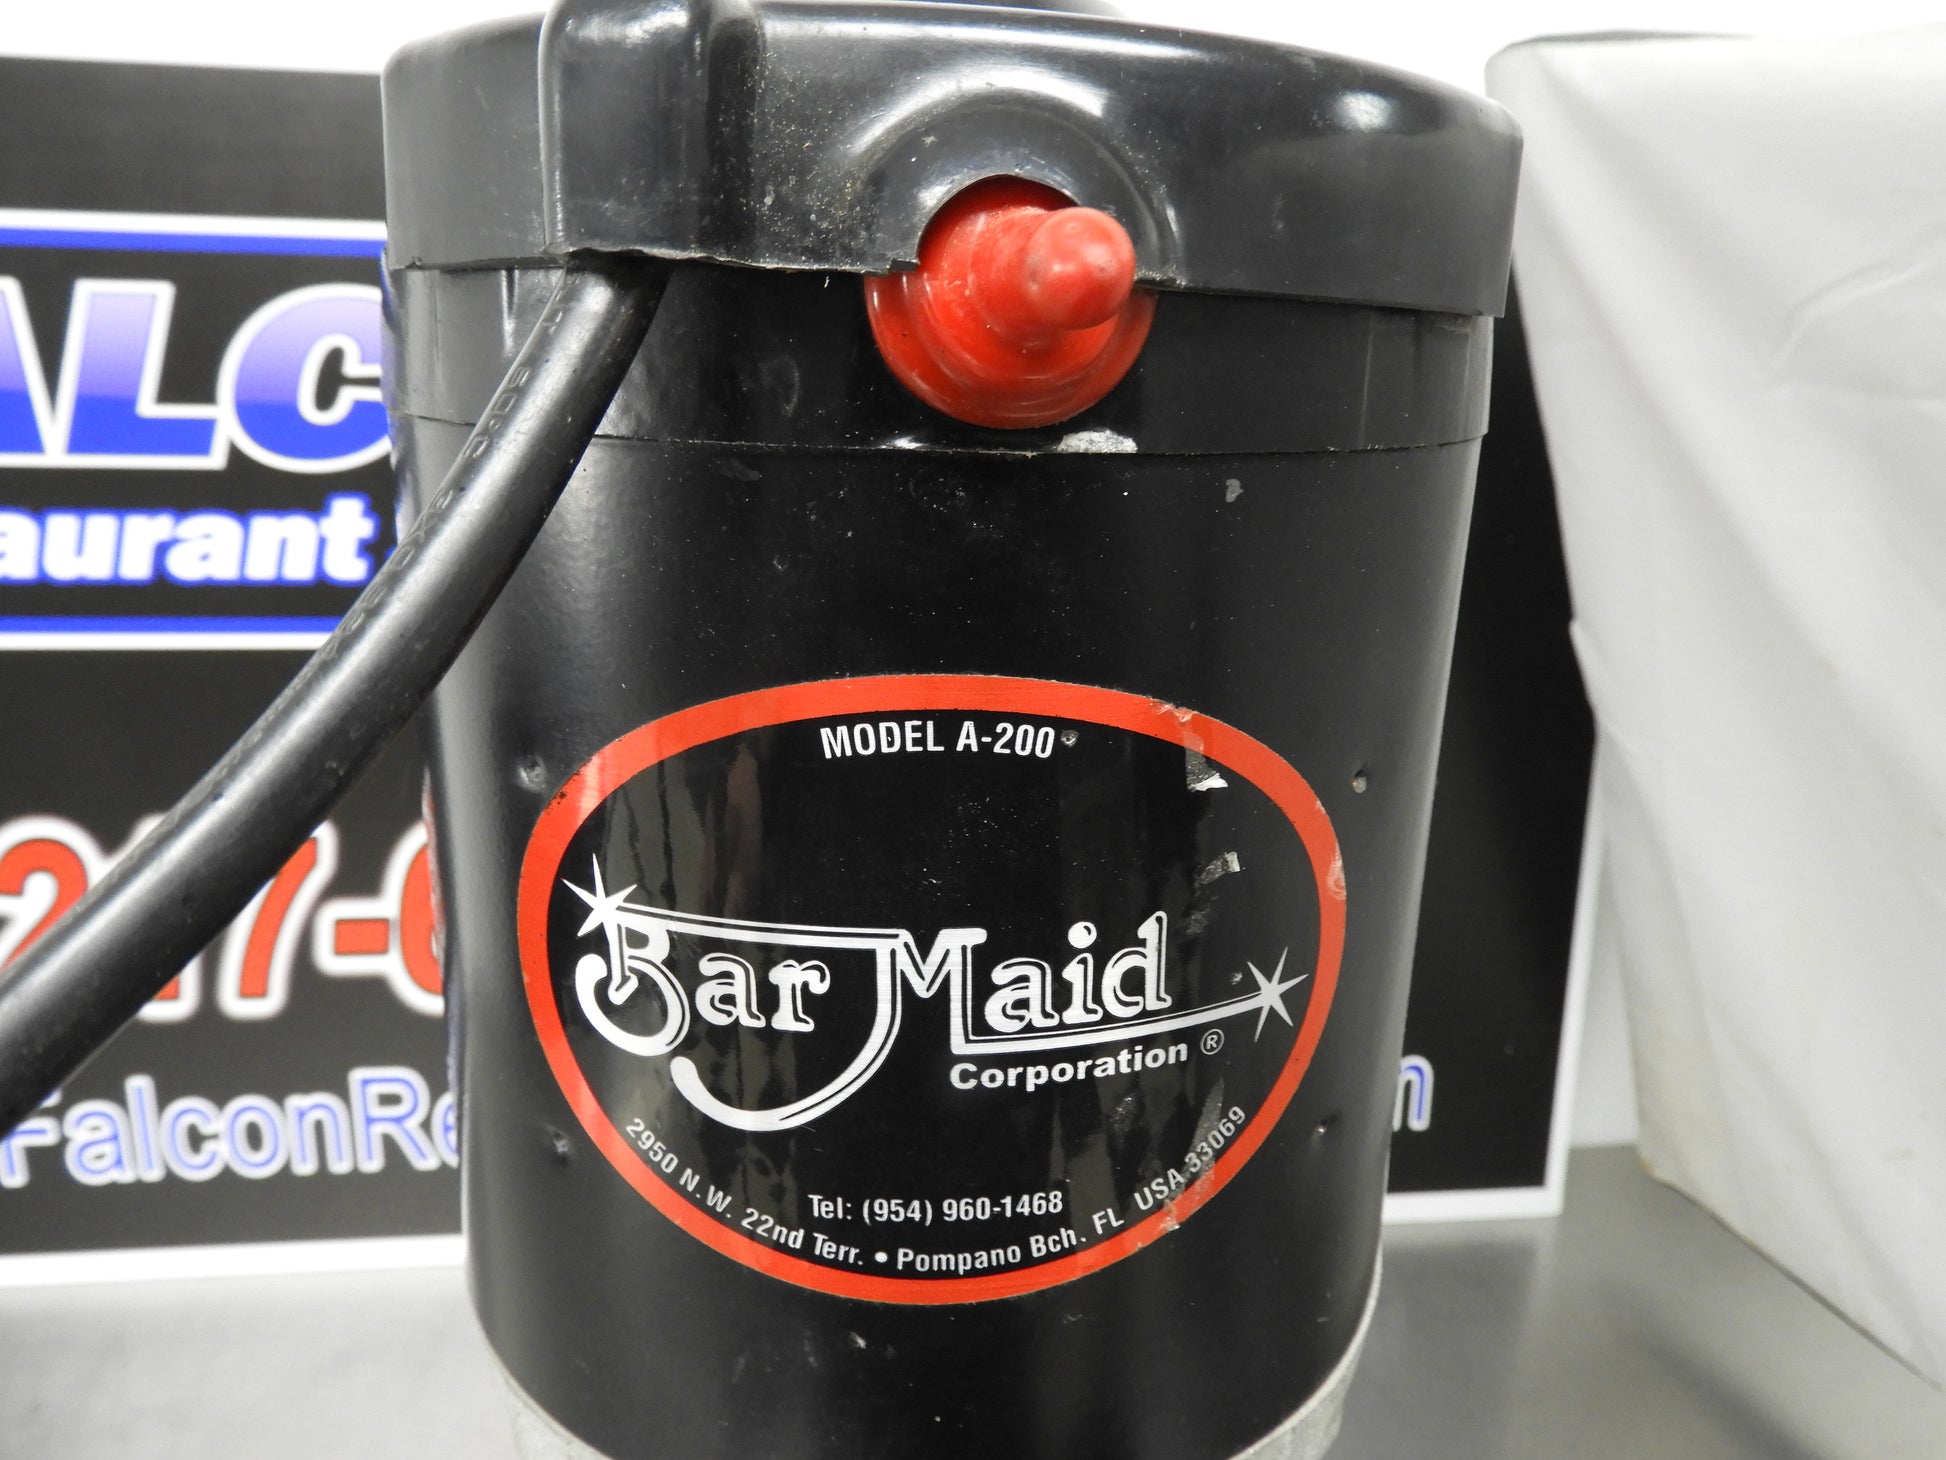 Bar Maid Glass Washer Model A-200